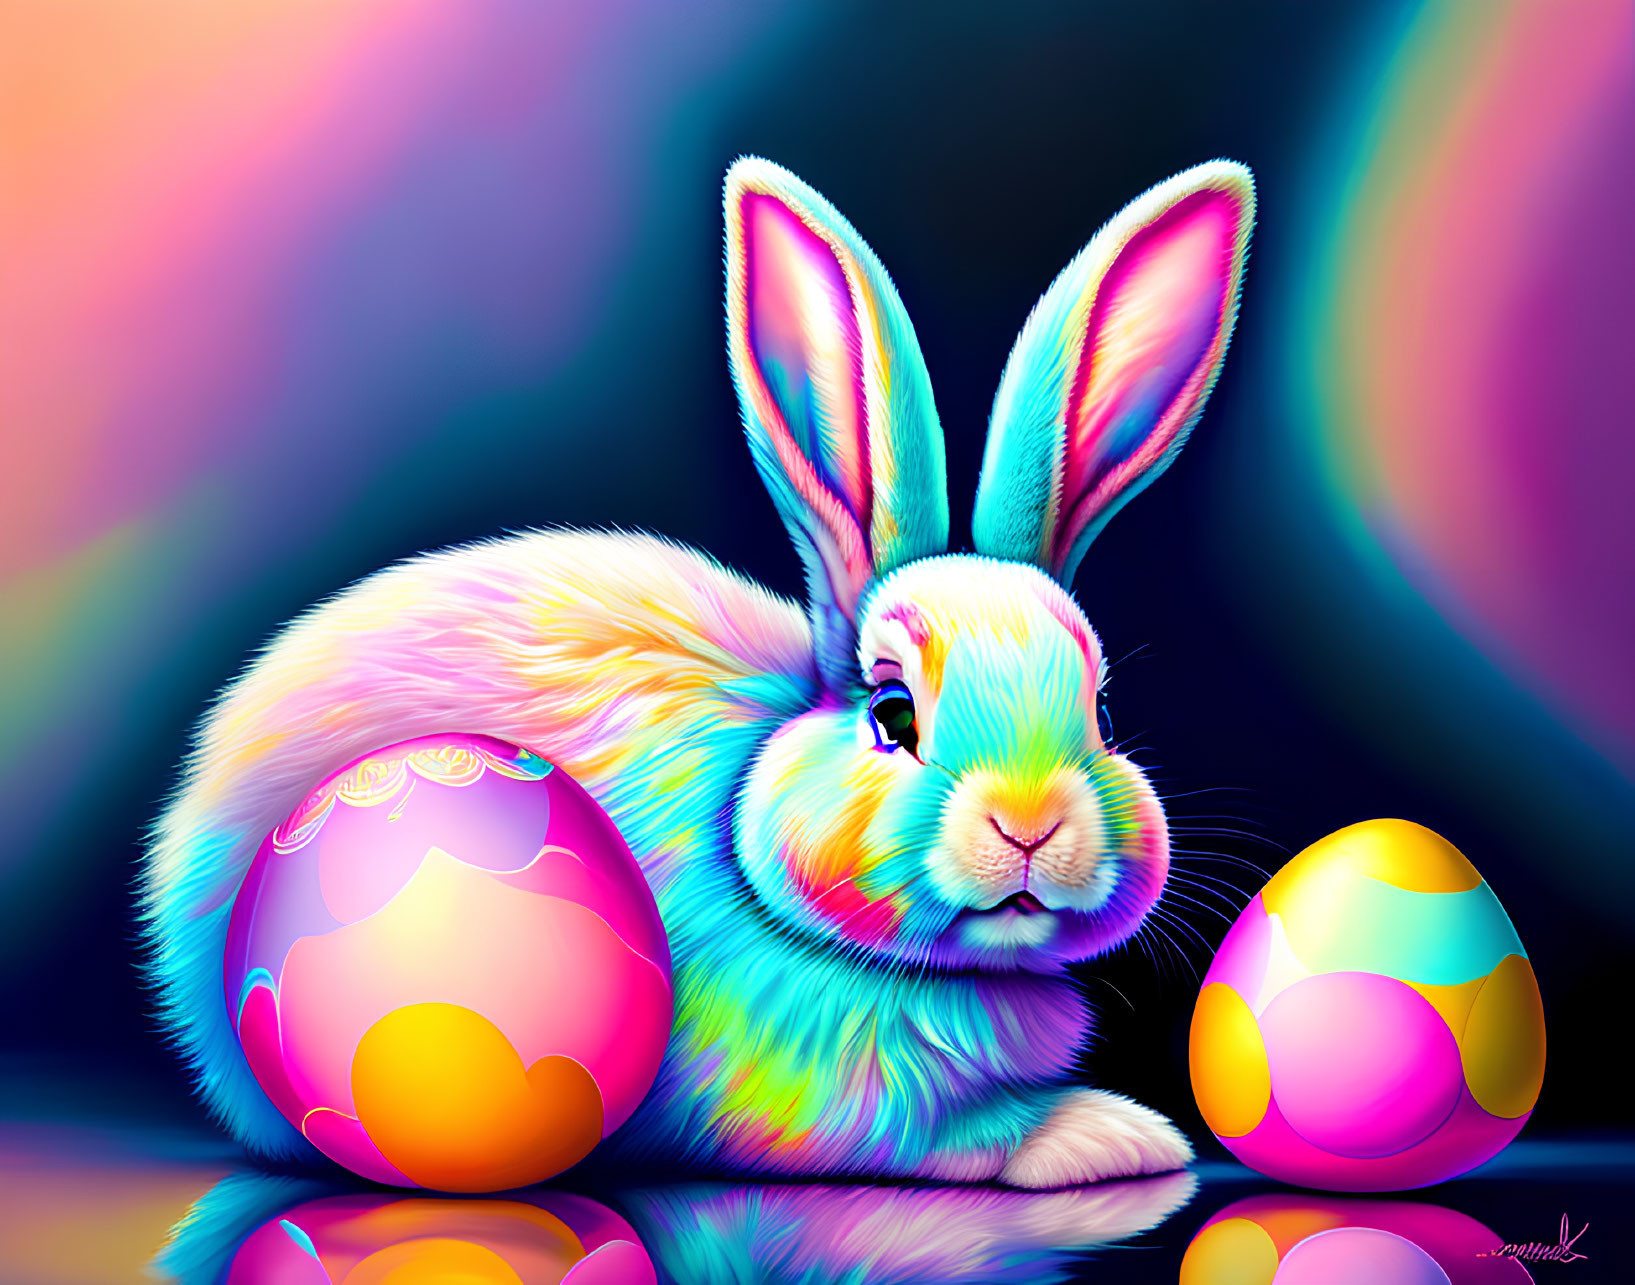 Vibrant neon digital artwork of fluffy rabbit with Easter eggs